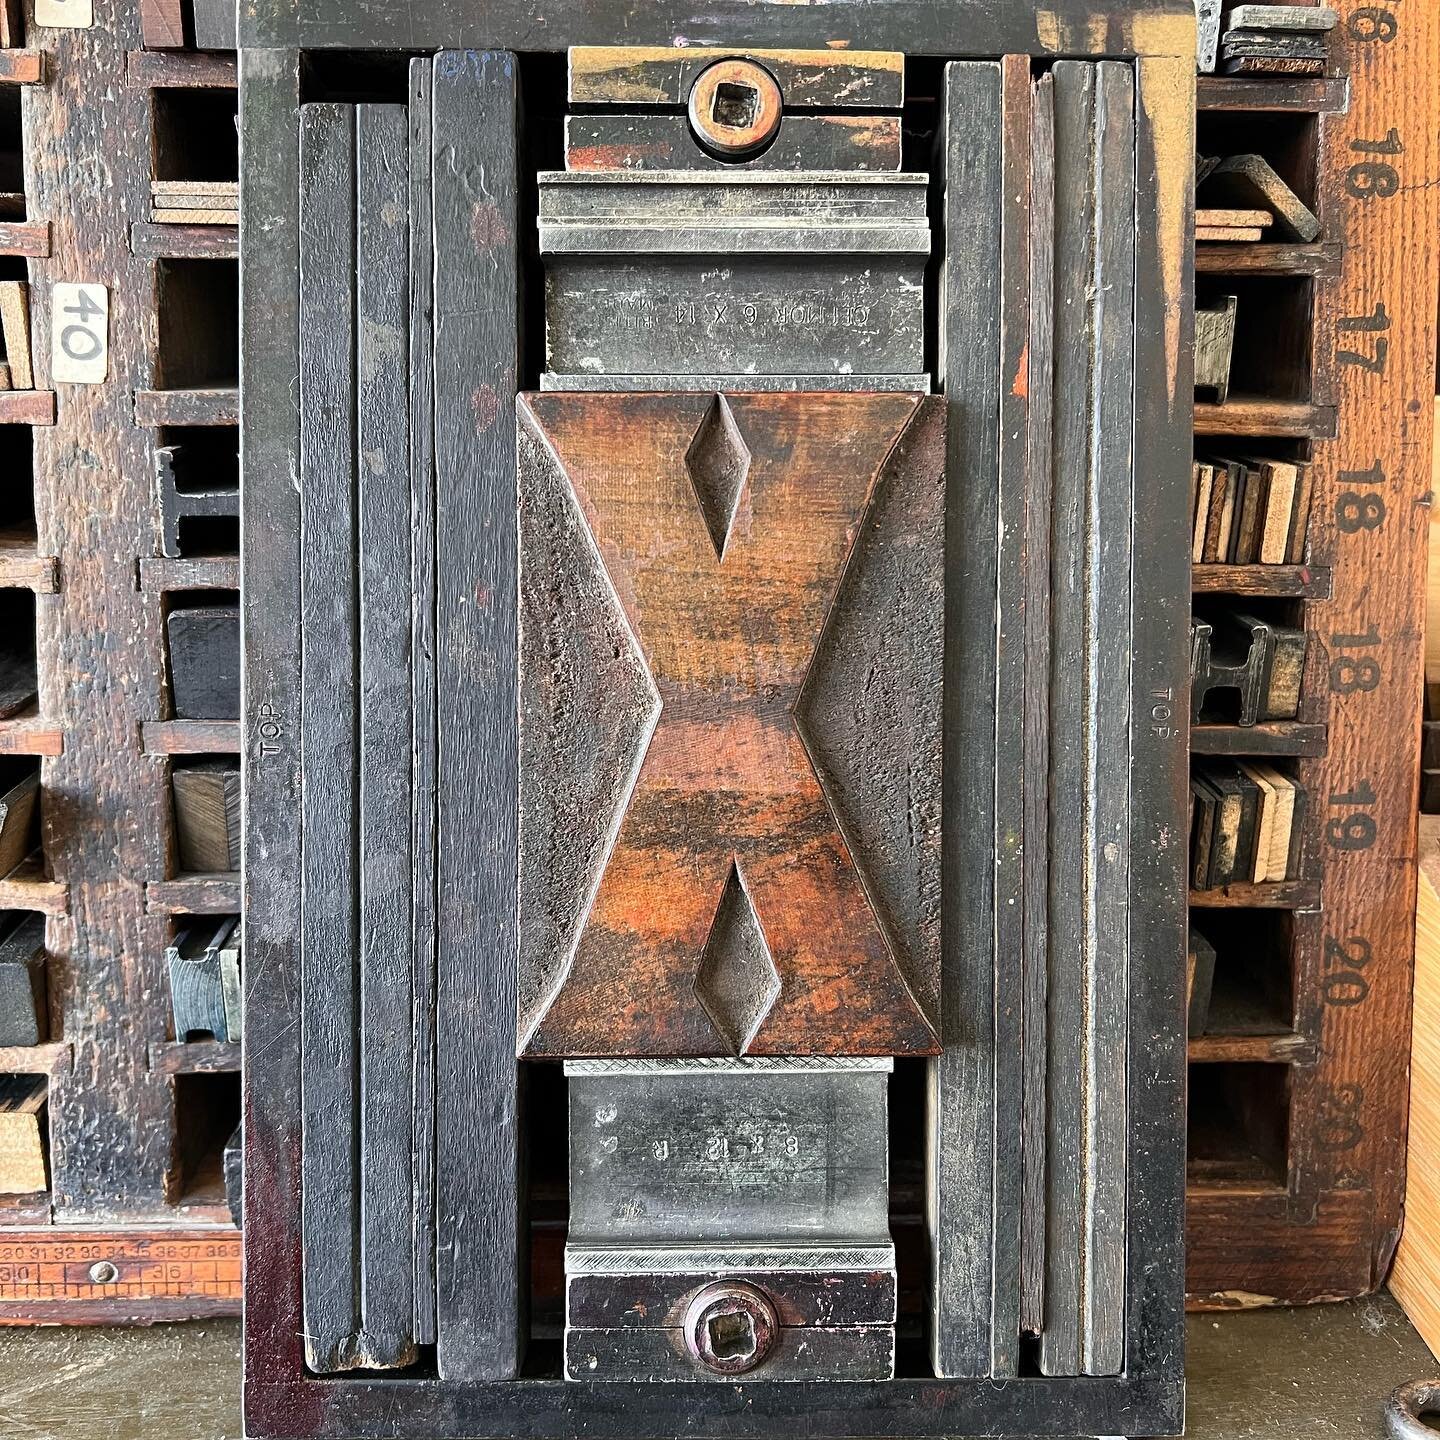 X. Locked up in a 8x5 chase. @36daysoftype #36daysoftype #36daysoftype_x #letterpress #woodtypewednesday #woodtype #letterpresslove #letterpressprinting #letterpressstudio